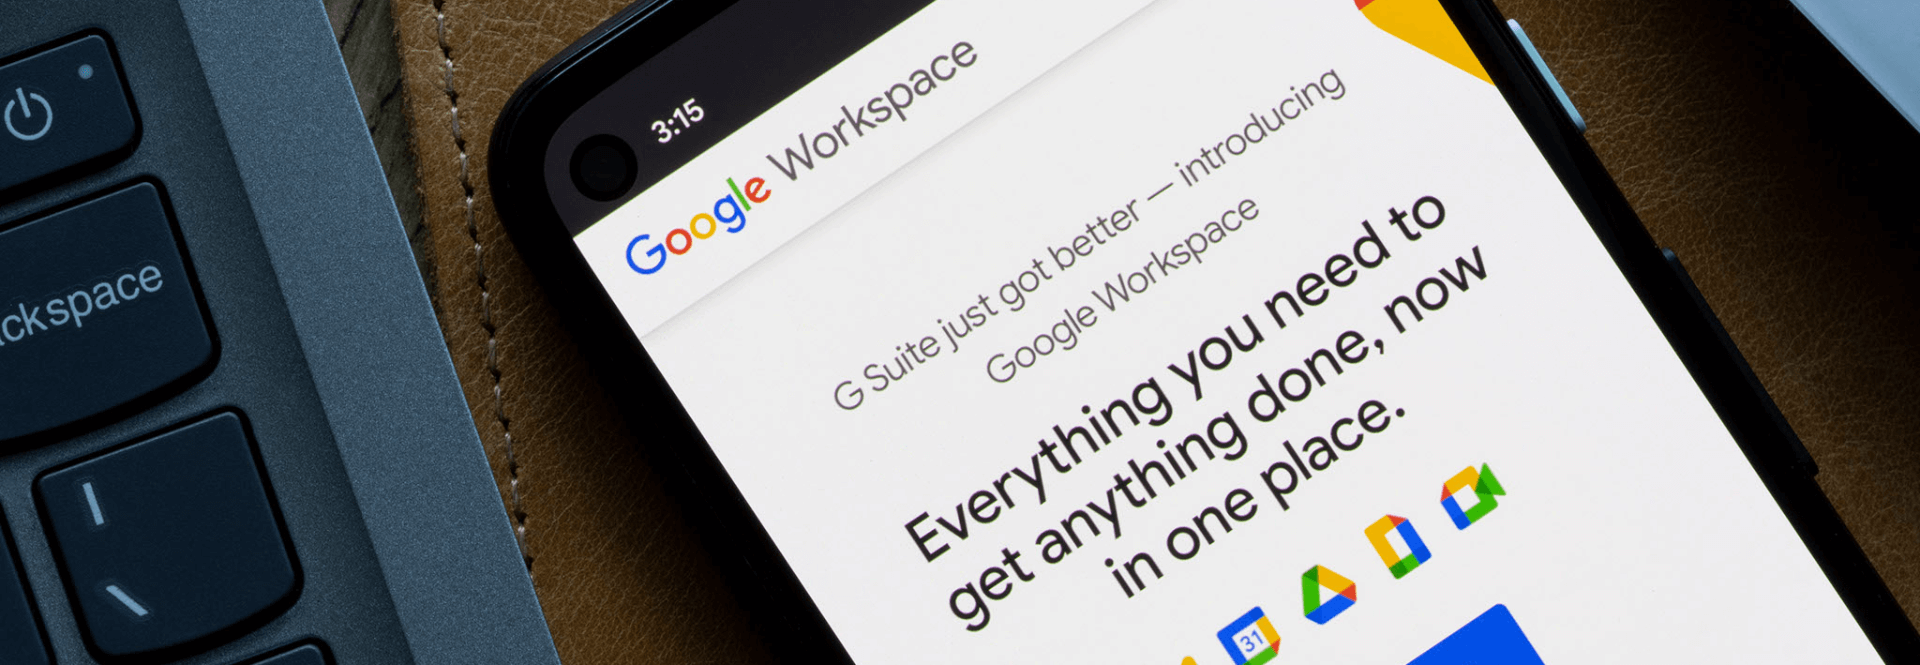 Google Workspace สำหรับบริษัทมีเครื่องมือหลากหลายประโยชน์